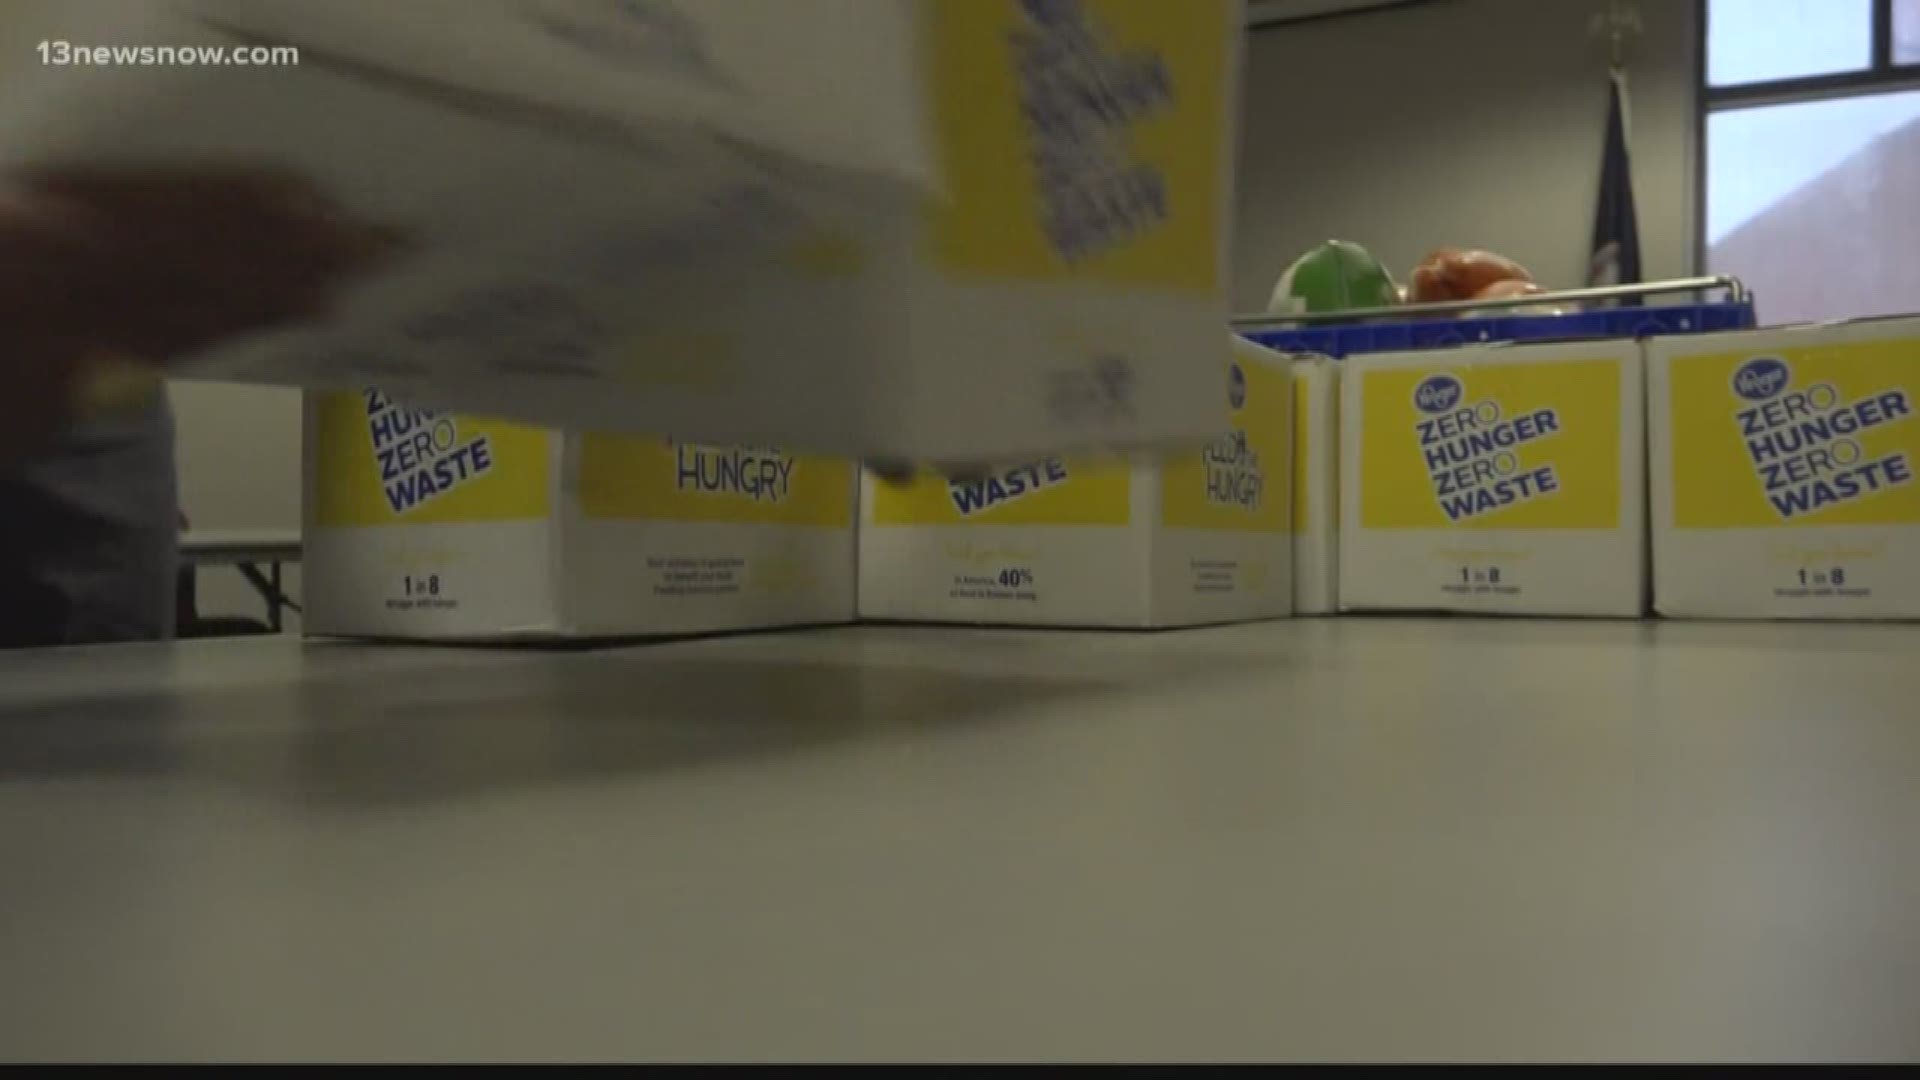 The Virginia Peninsula Foodbank brought food to TSA workers.